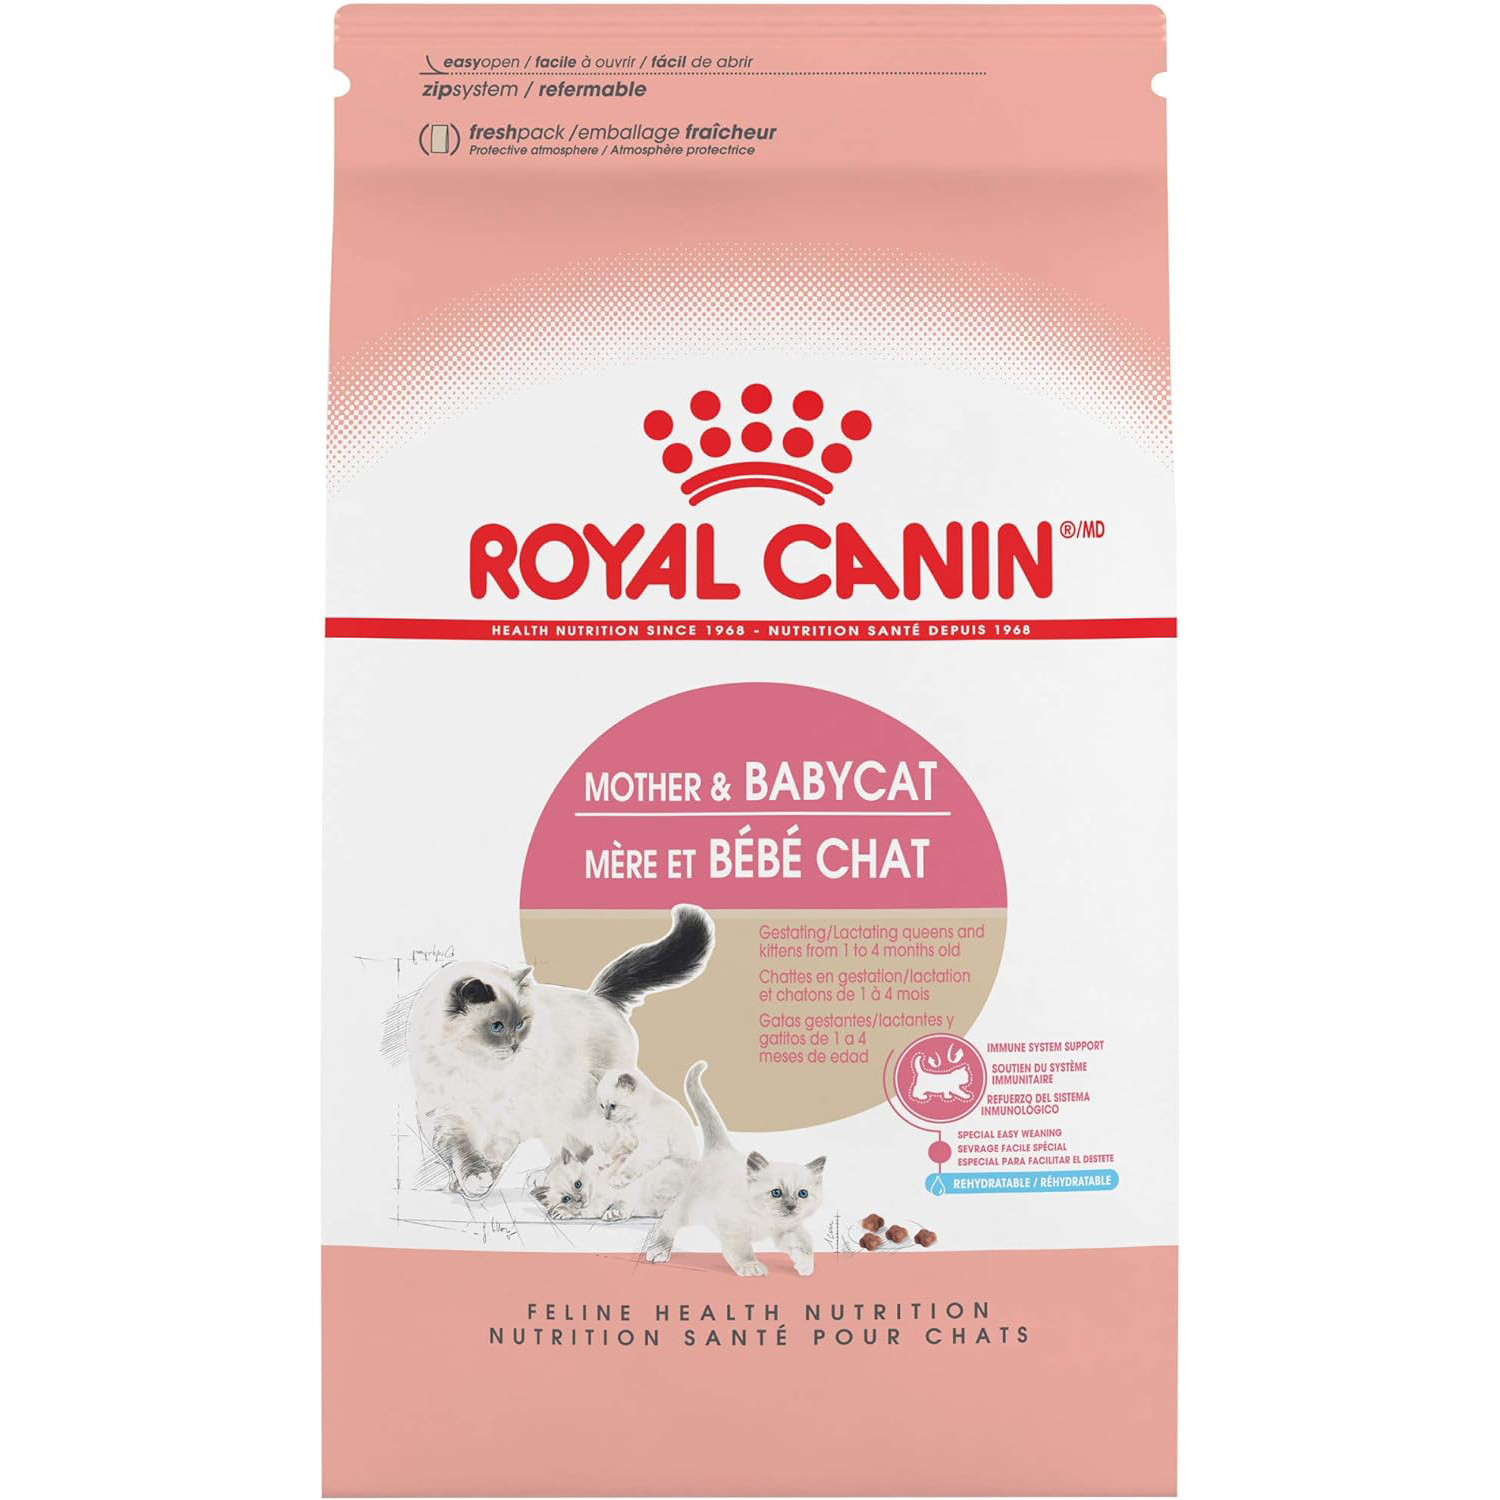 ROYAL CANIN Feline Health Nutrition Mother & Babycat Dry cat Food